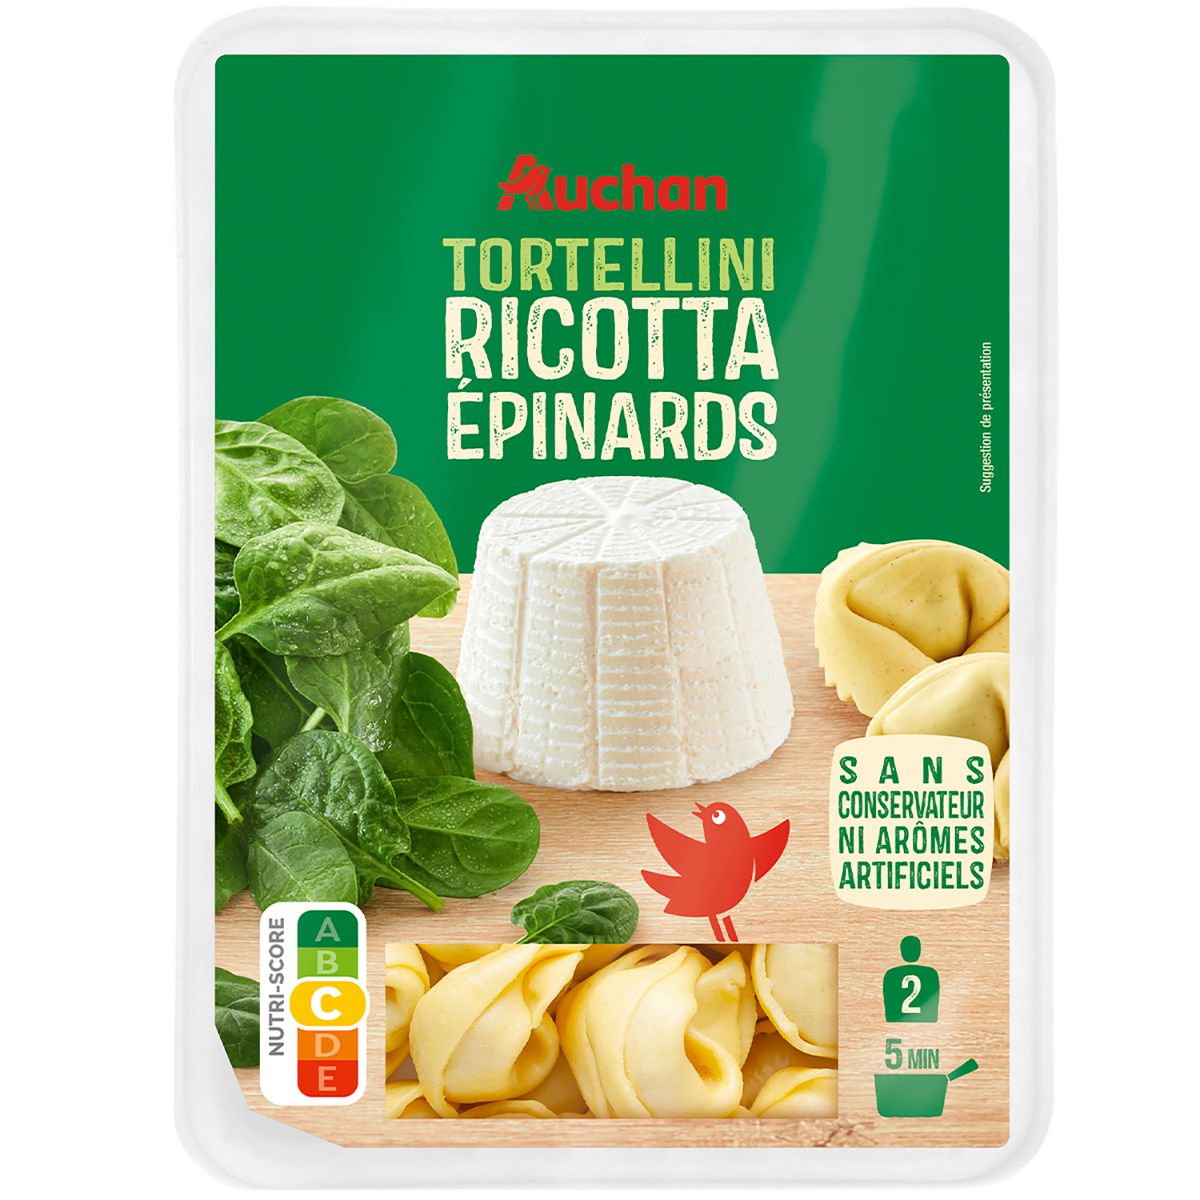 AUCHAN Tortellini ricotta épinards 2 portions 300g